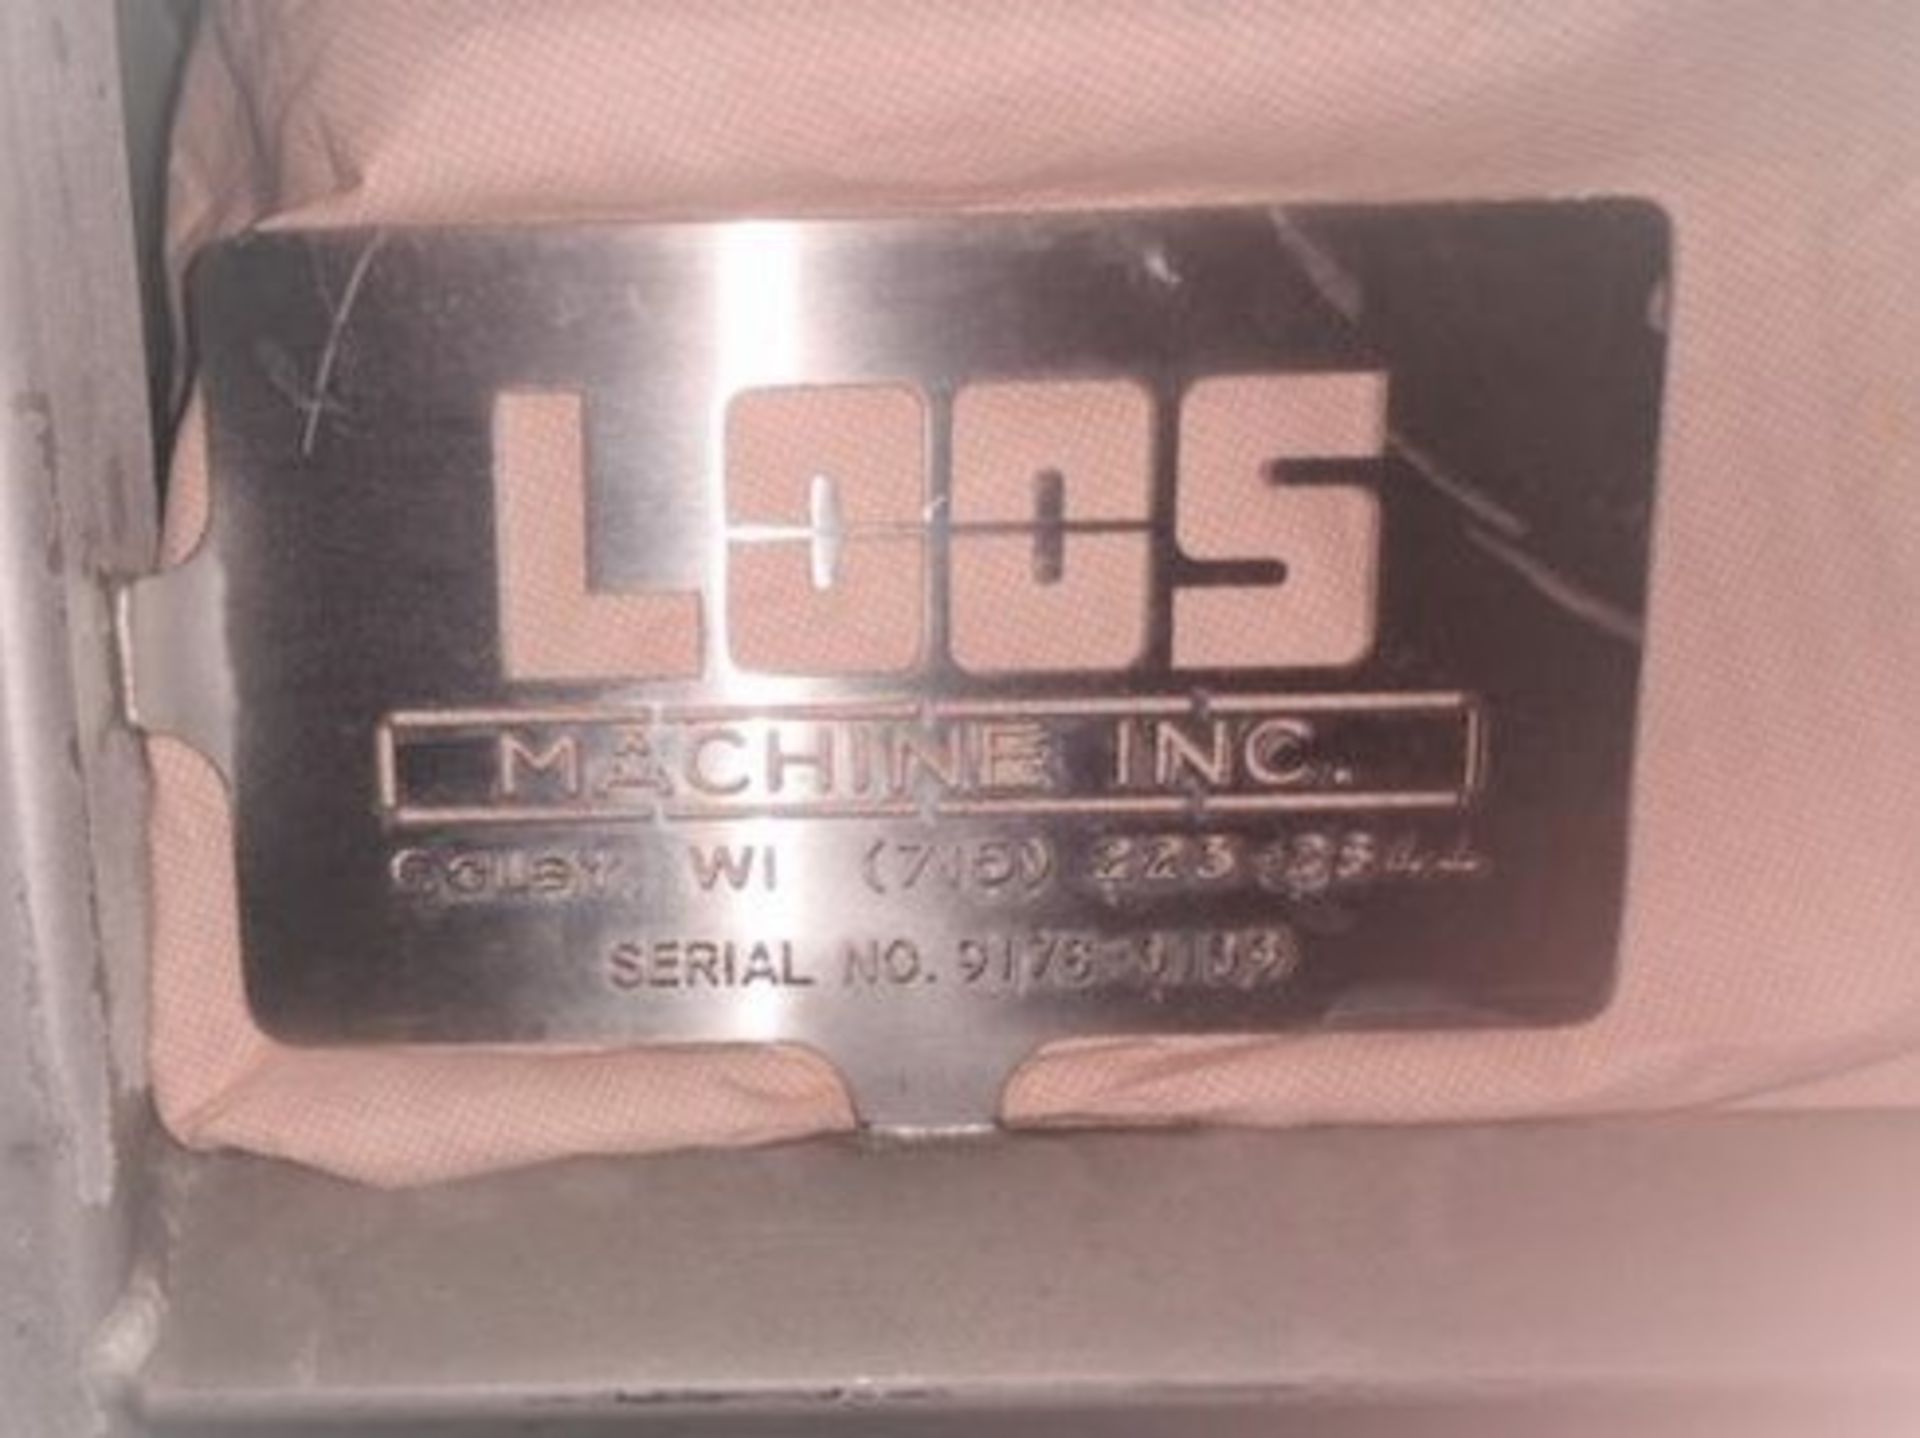 LOOS Machine 32 Inch Diameter Stainless Steel Sanitary Tumble Drum, S/N 9176-0136, Machine meets - Image 13 of 13